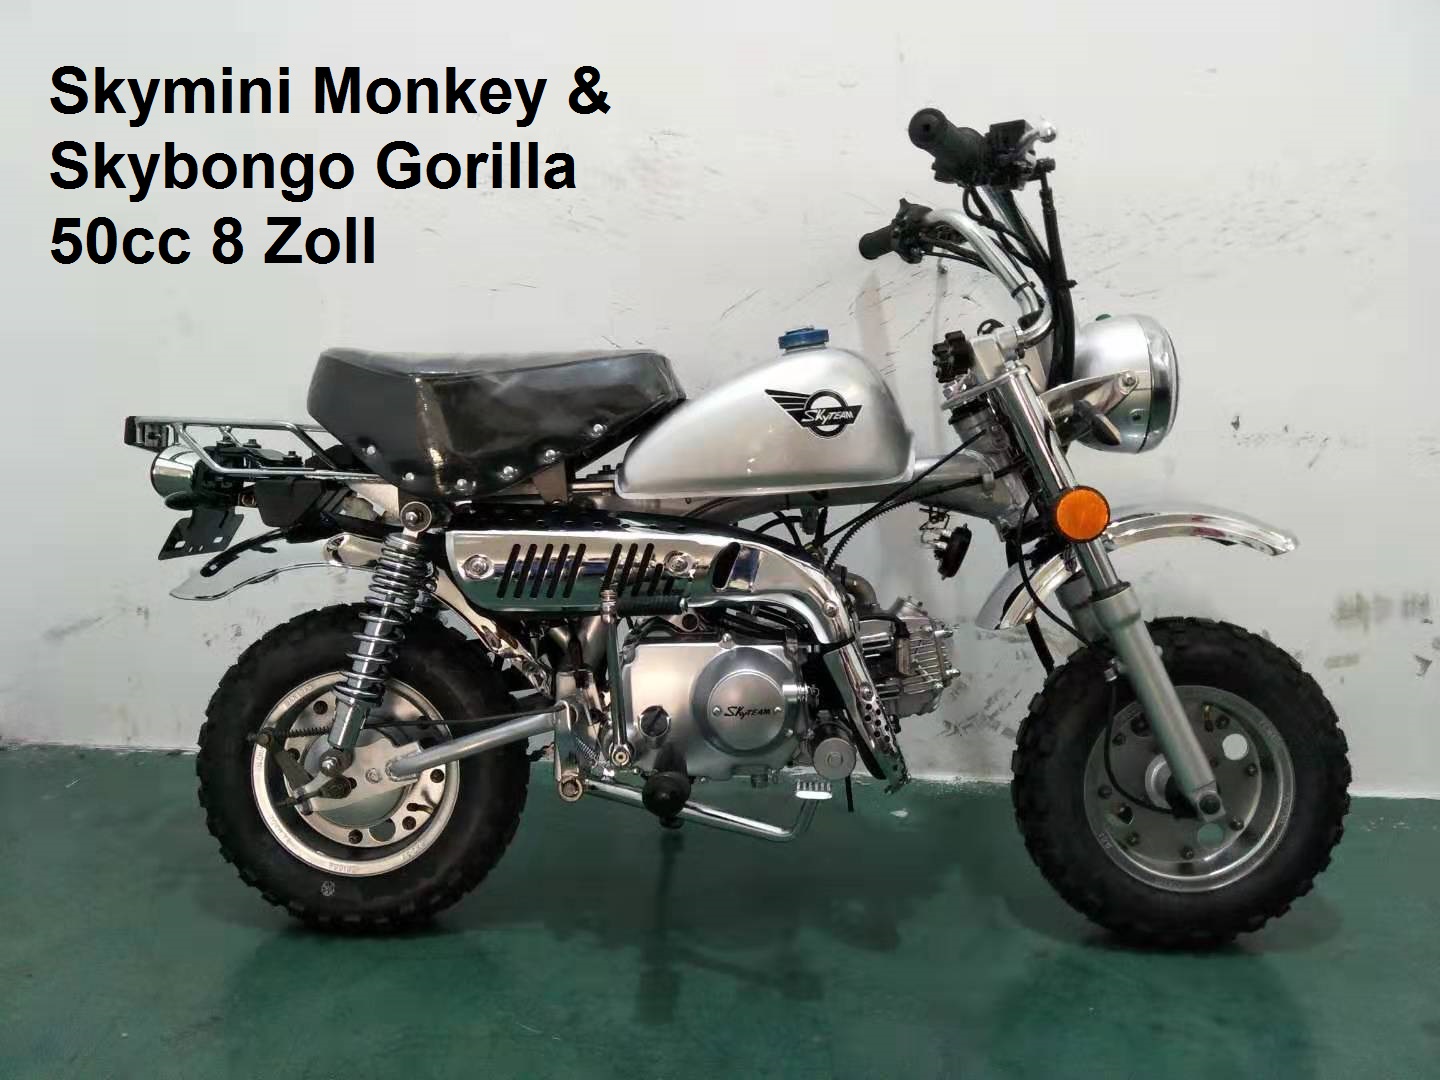 Skymini Monkey & Skybongo Gorilla 50cc 8 Zoll